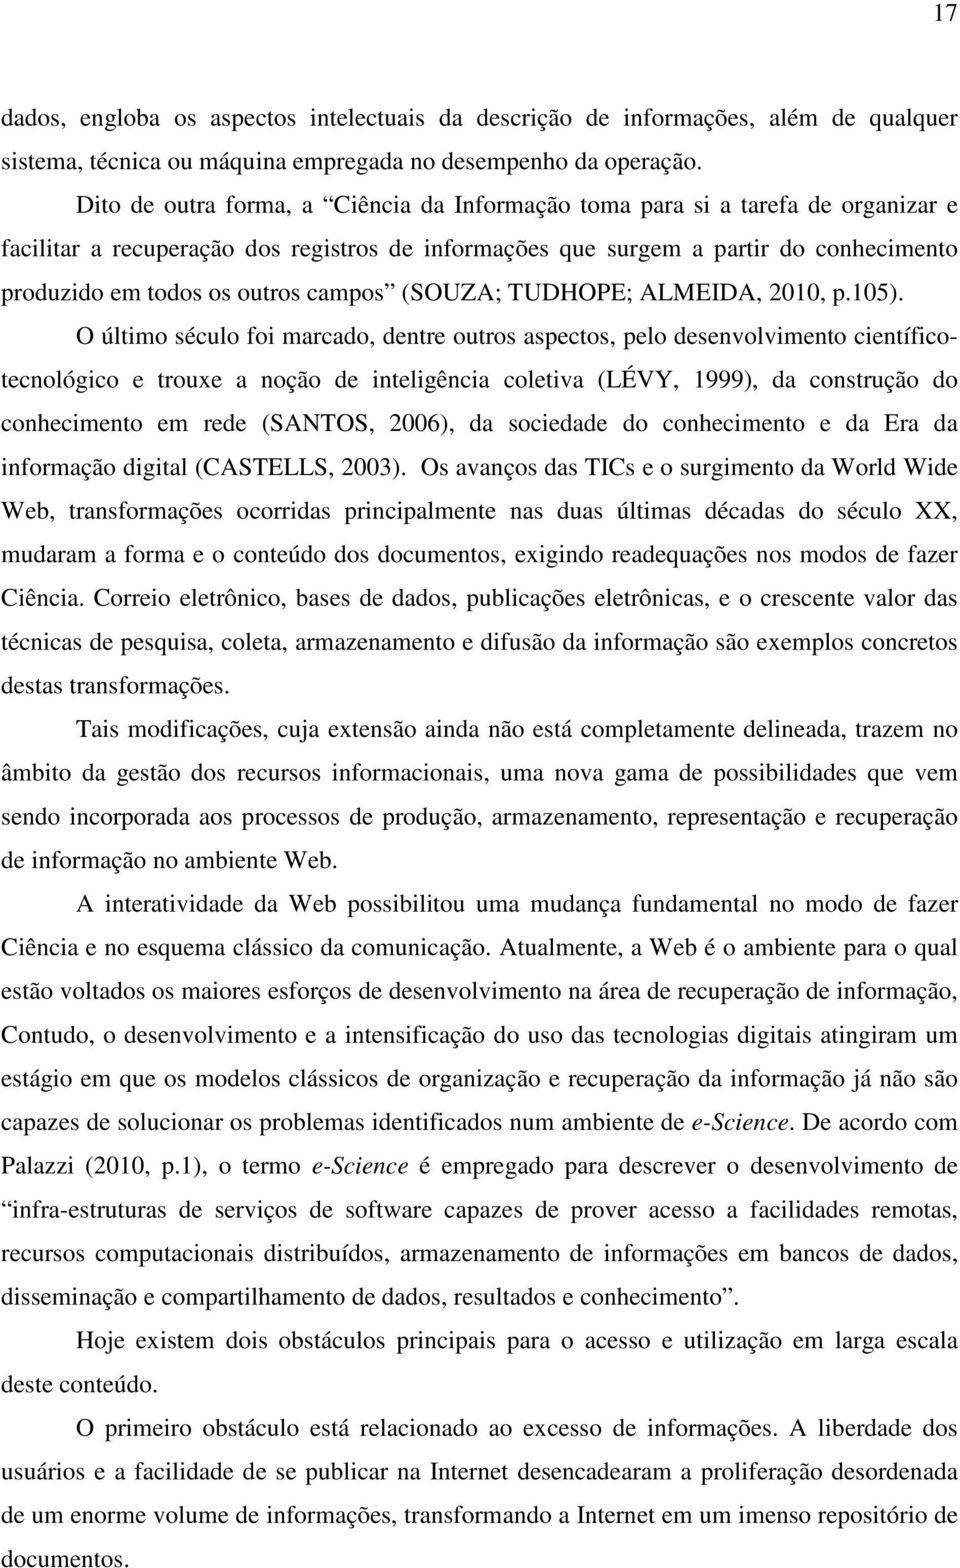 campos (SOUZA; TUDHOPE; ALMEIDA, 2010, p.105).